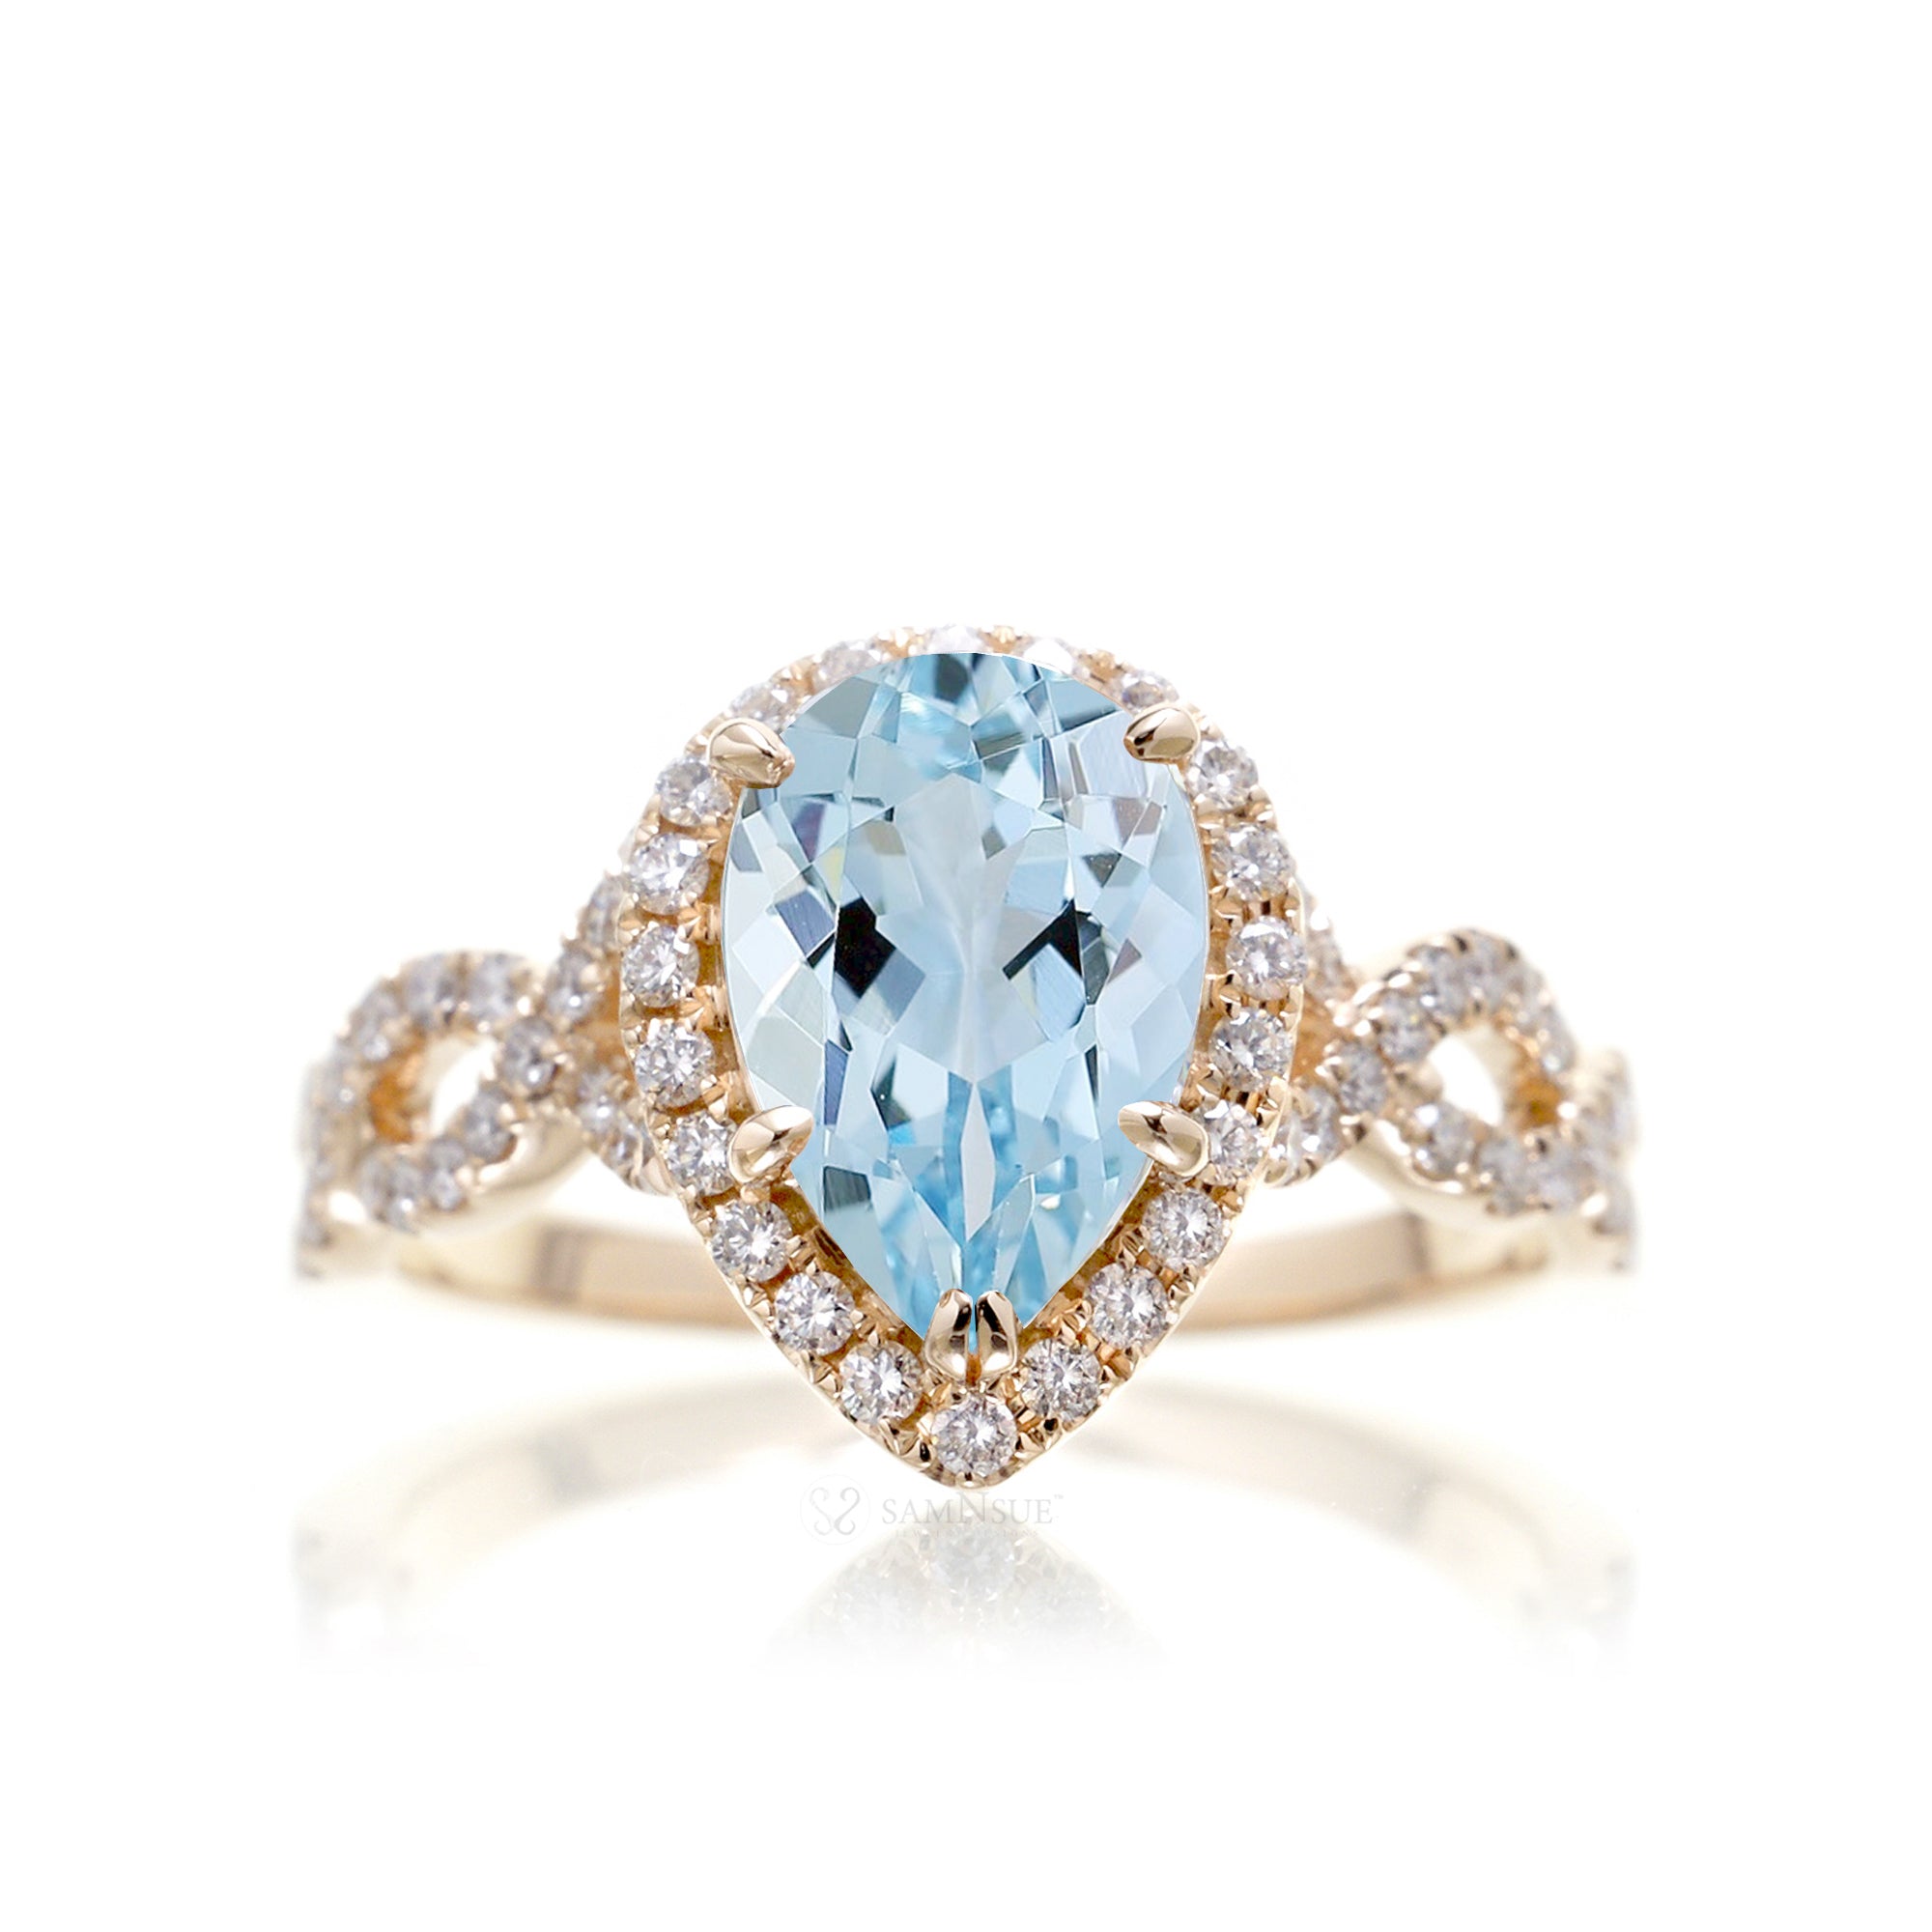 Pear aquamarine gemstone ring diamond halo twisted band yellow gold